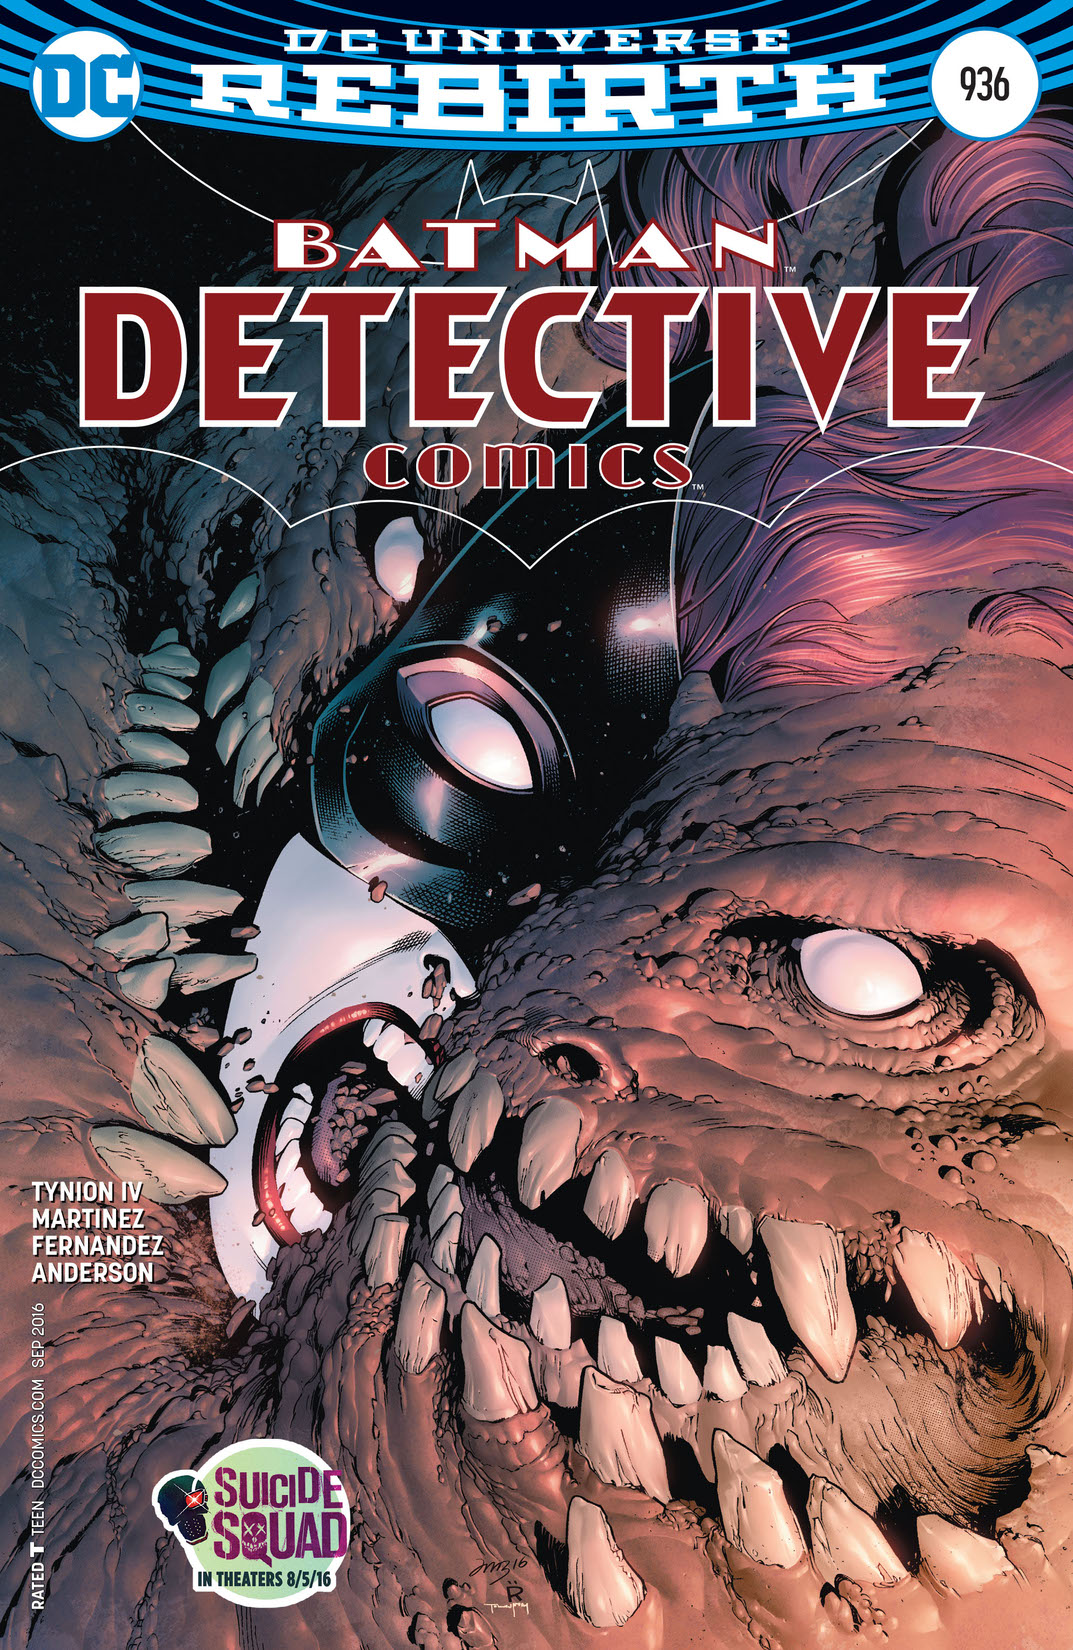 Detective Comics (2016-) #936 preview images